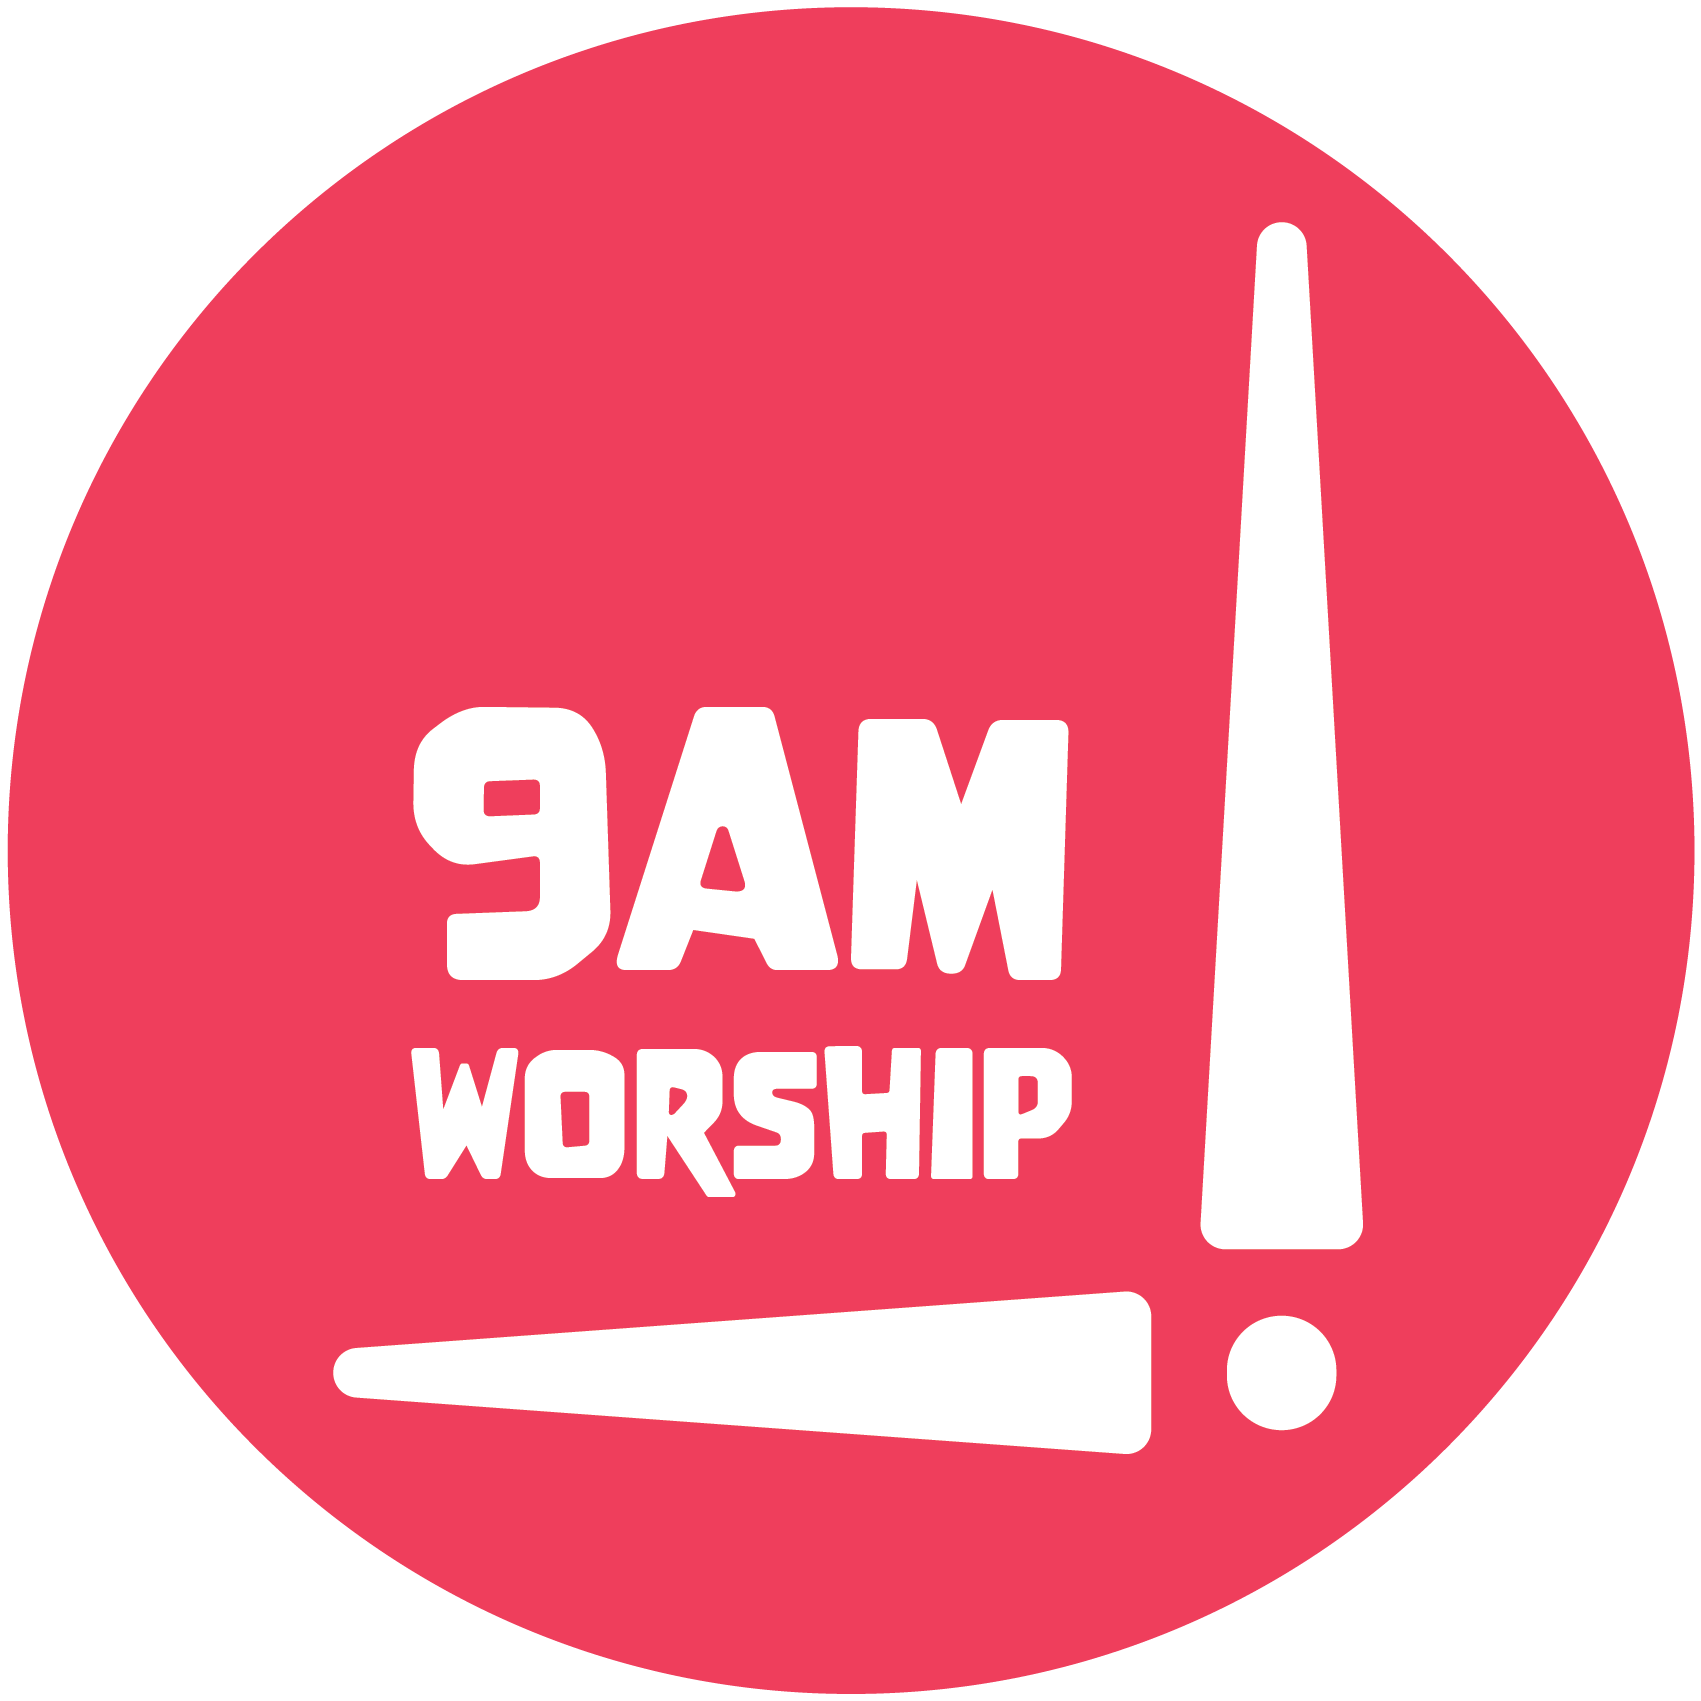 9am Worship